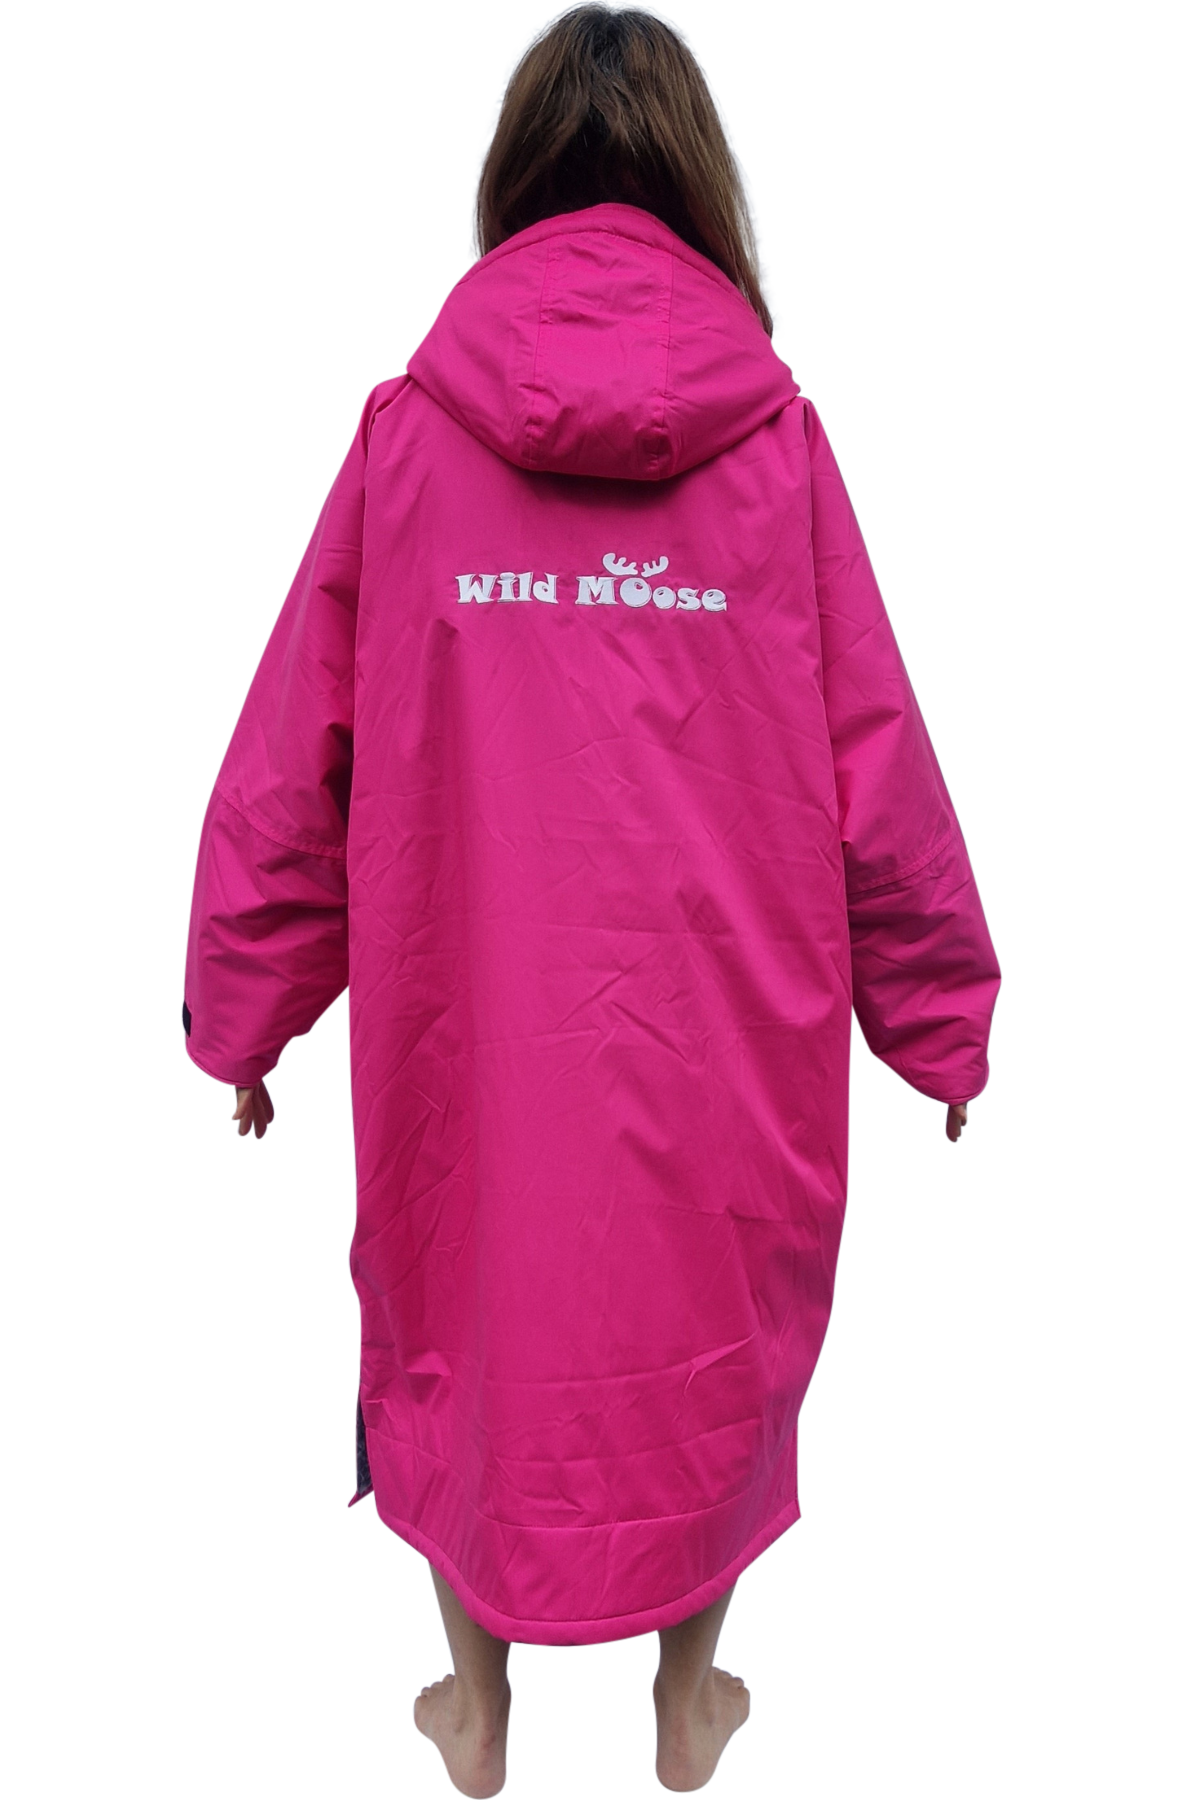 Bloomin' Moose Eco - long sleeve changing robe -  vivid pink/dark grey